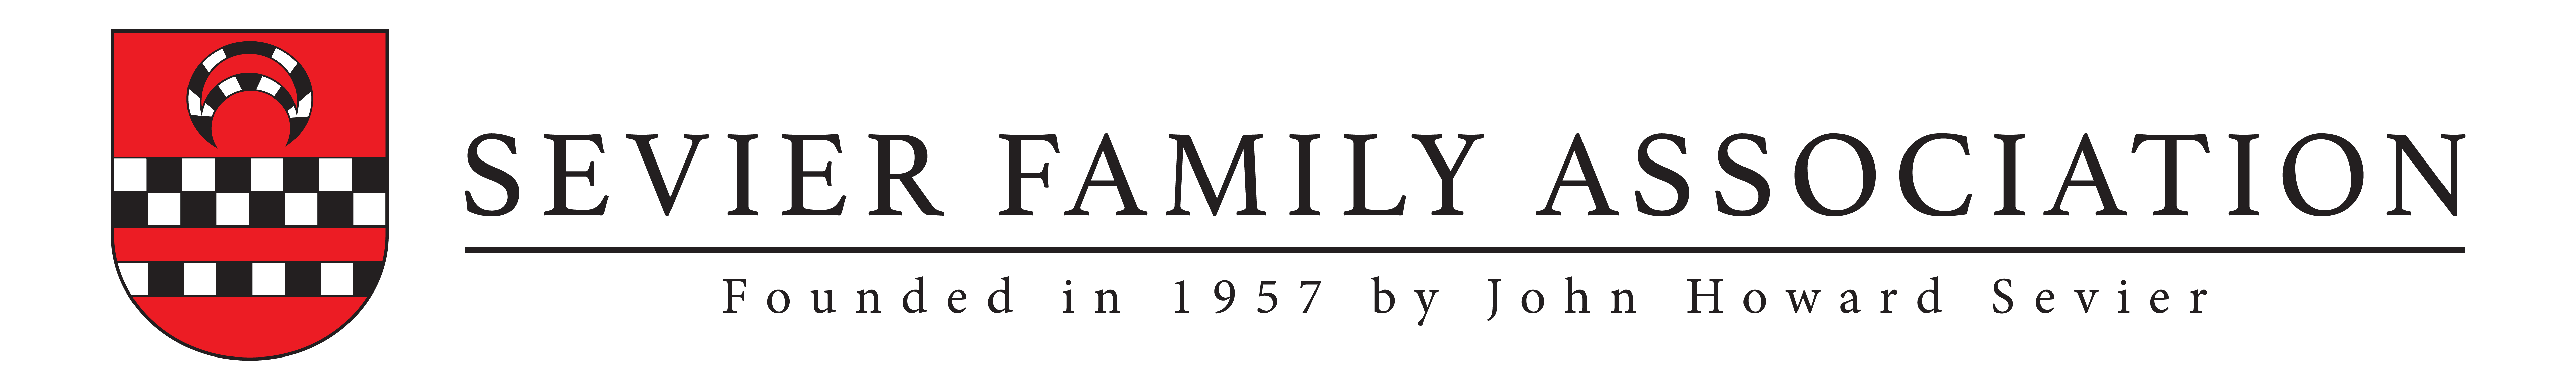 Sevier Family Association